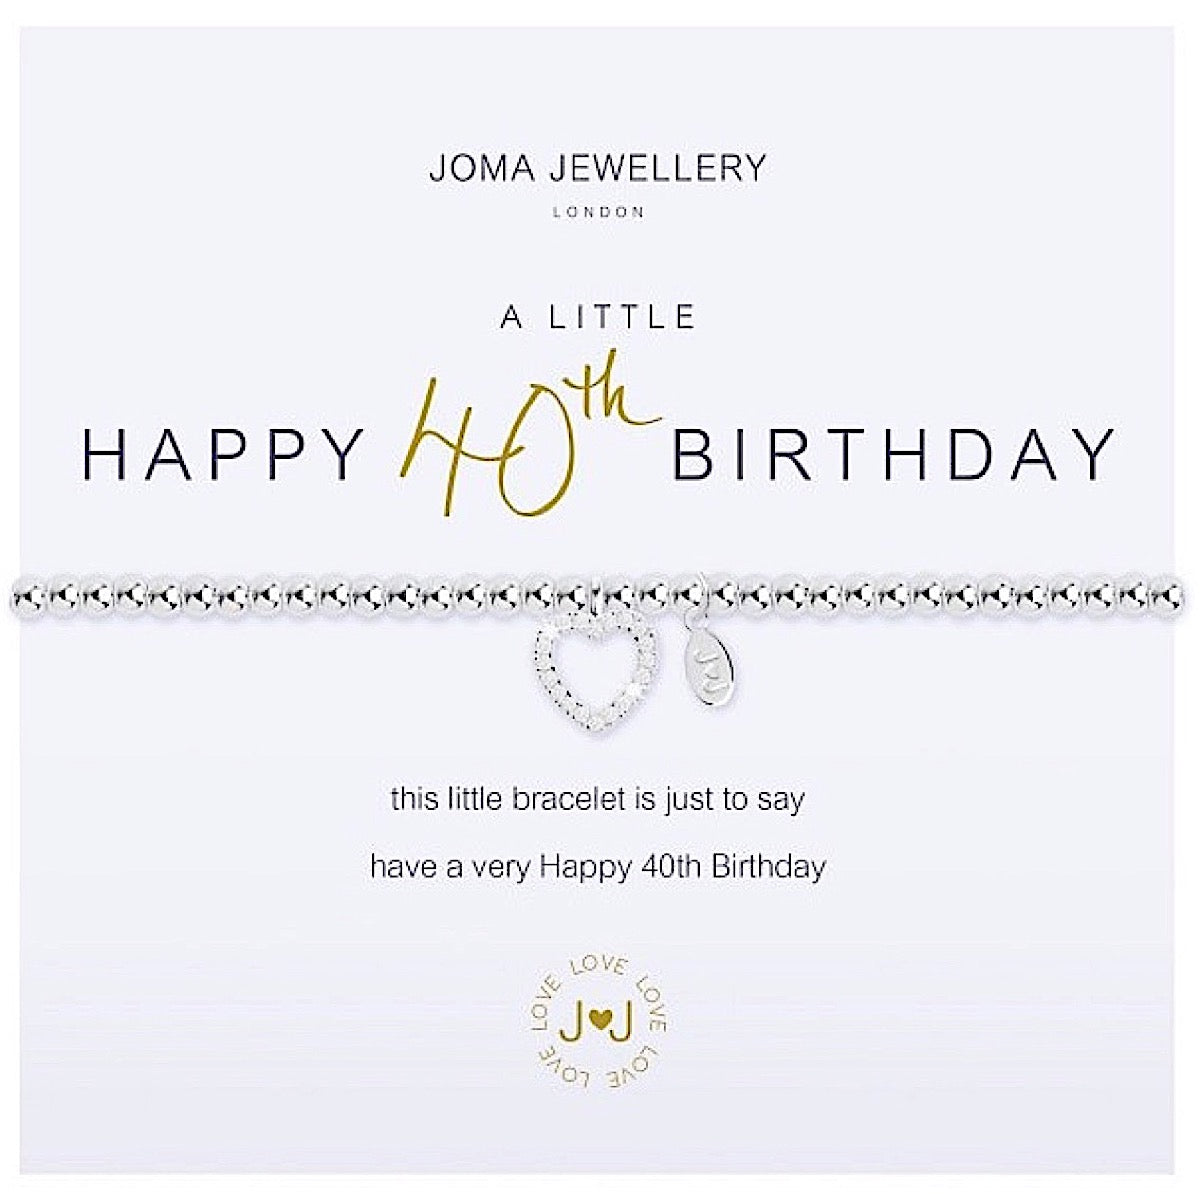 Joma Jewellery A Little Happy 40th Birthday Bracelet